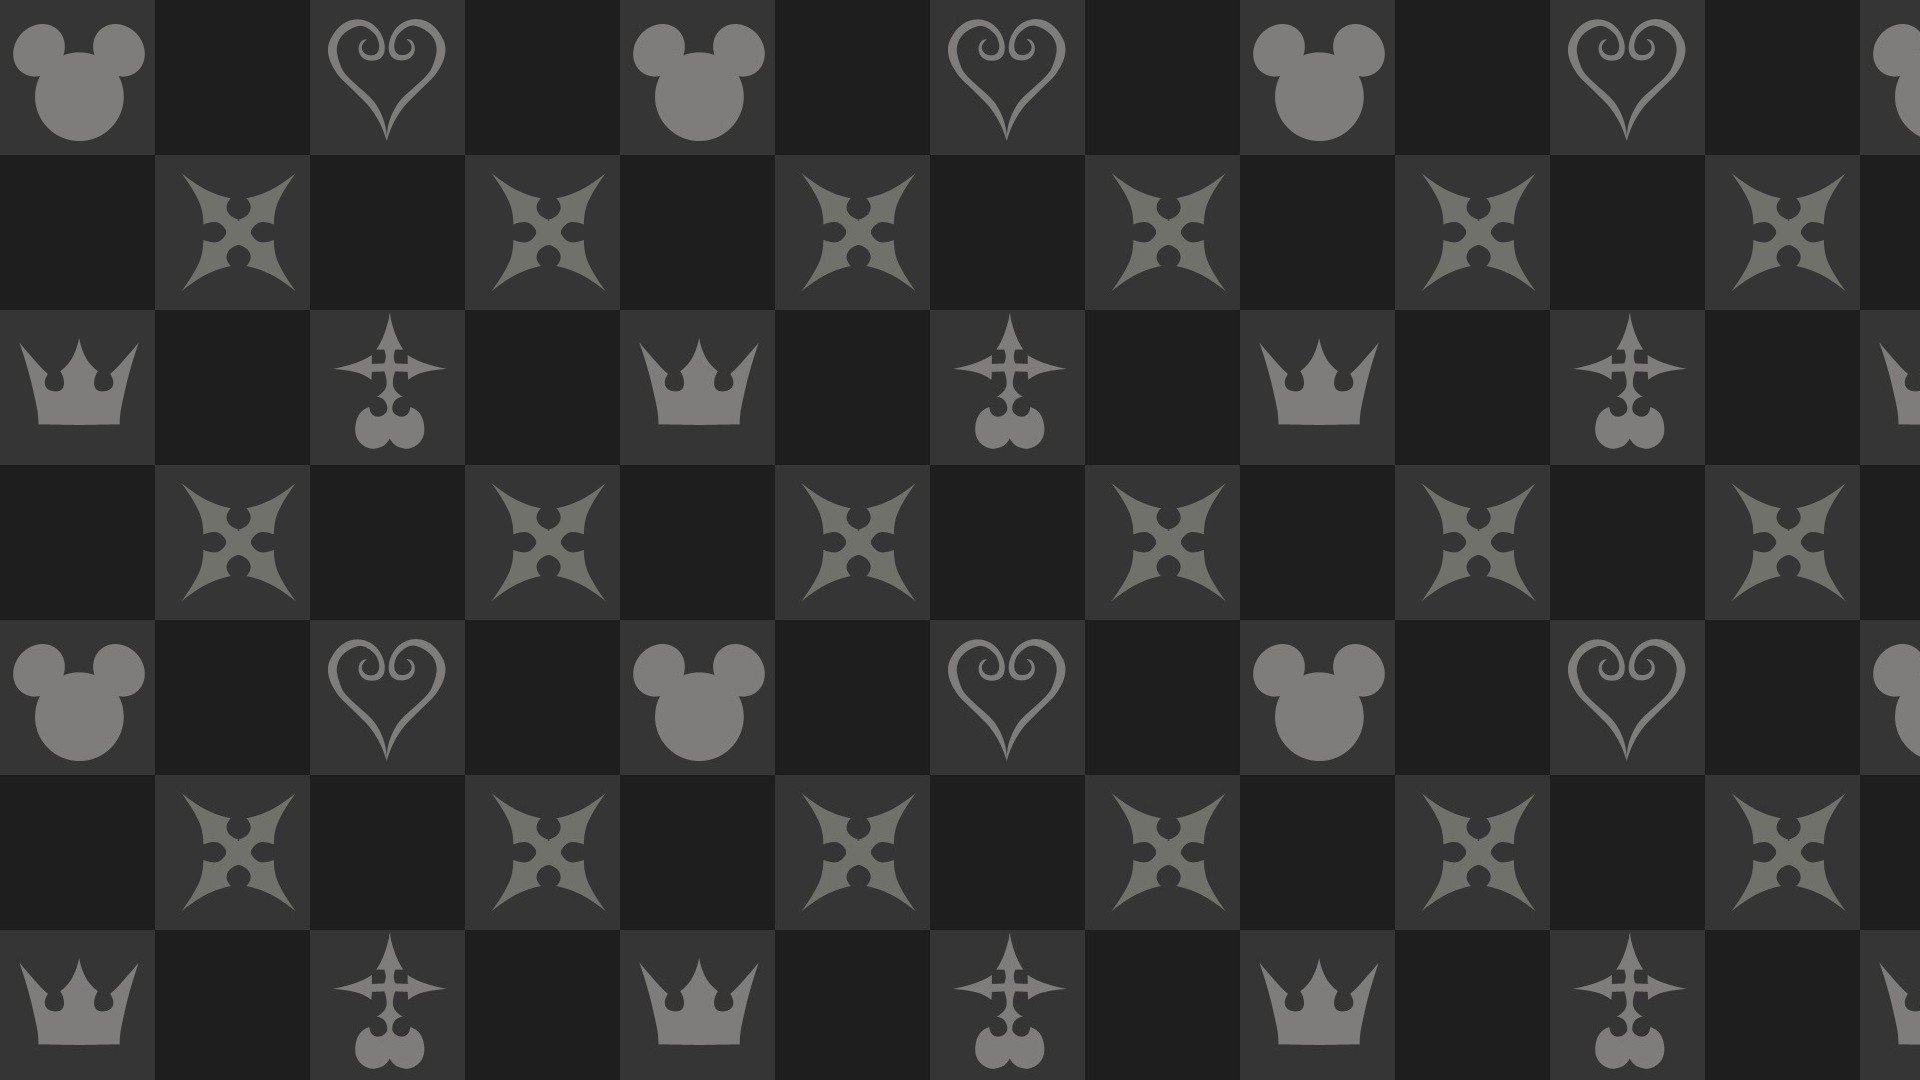 kingdom hearts 3 wallpaper